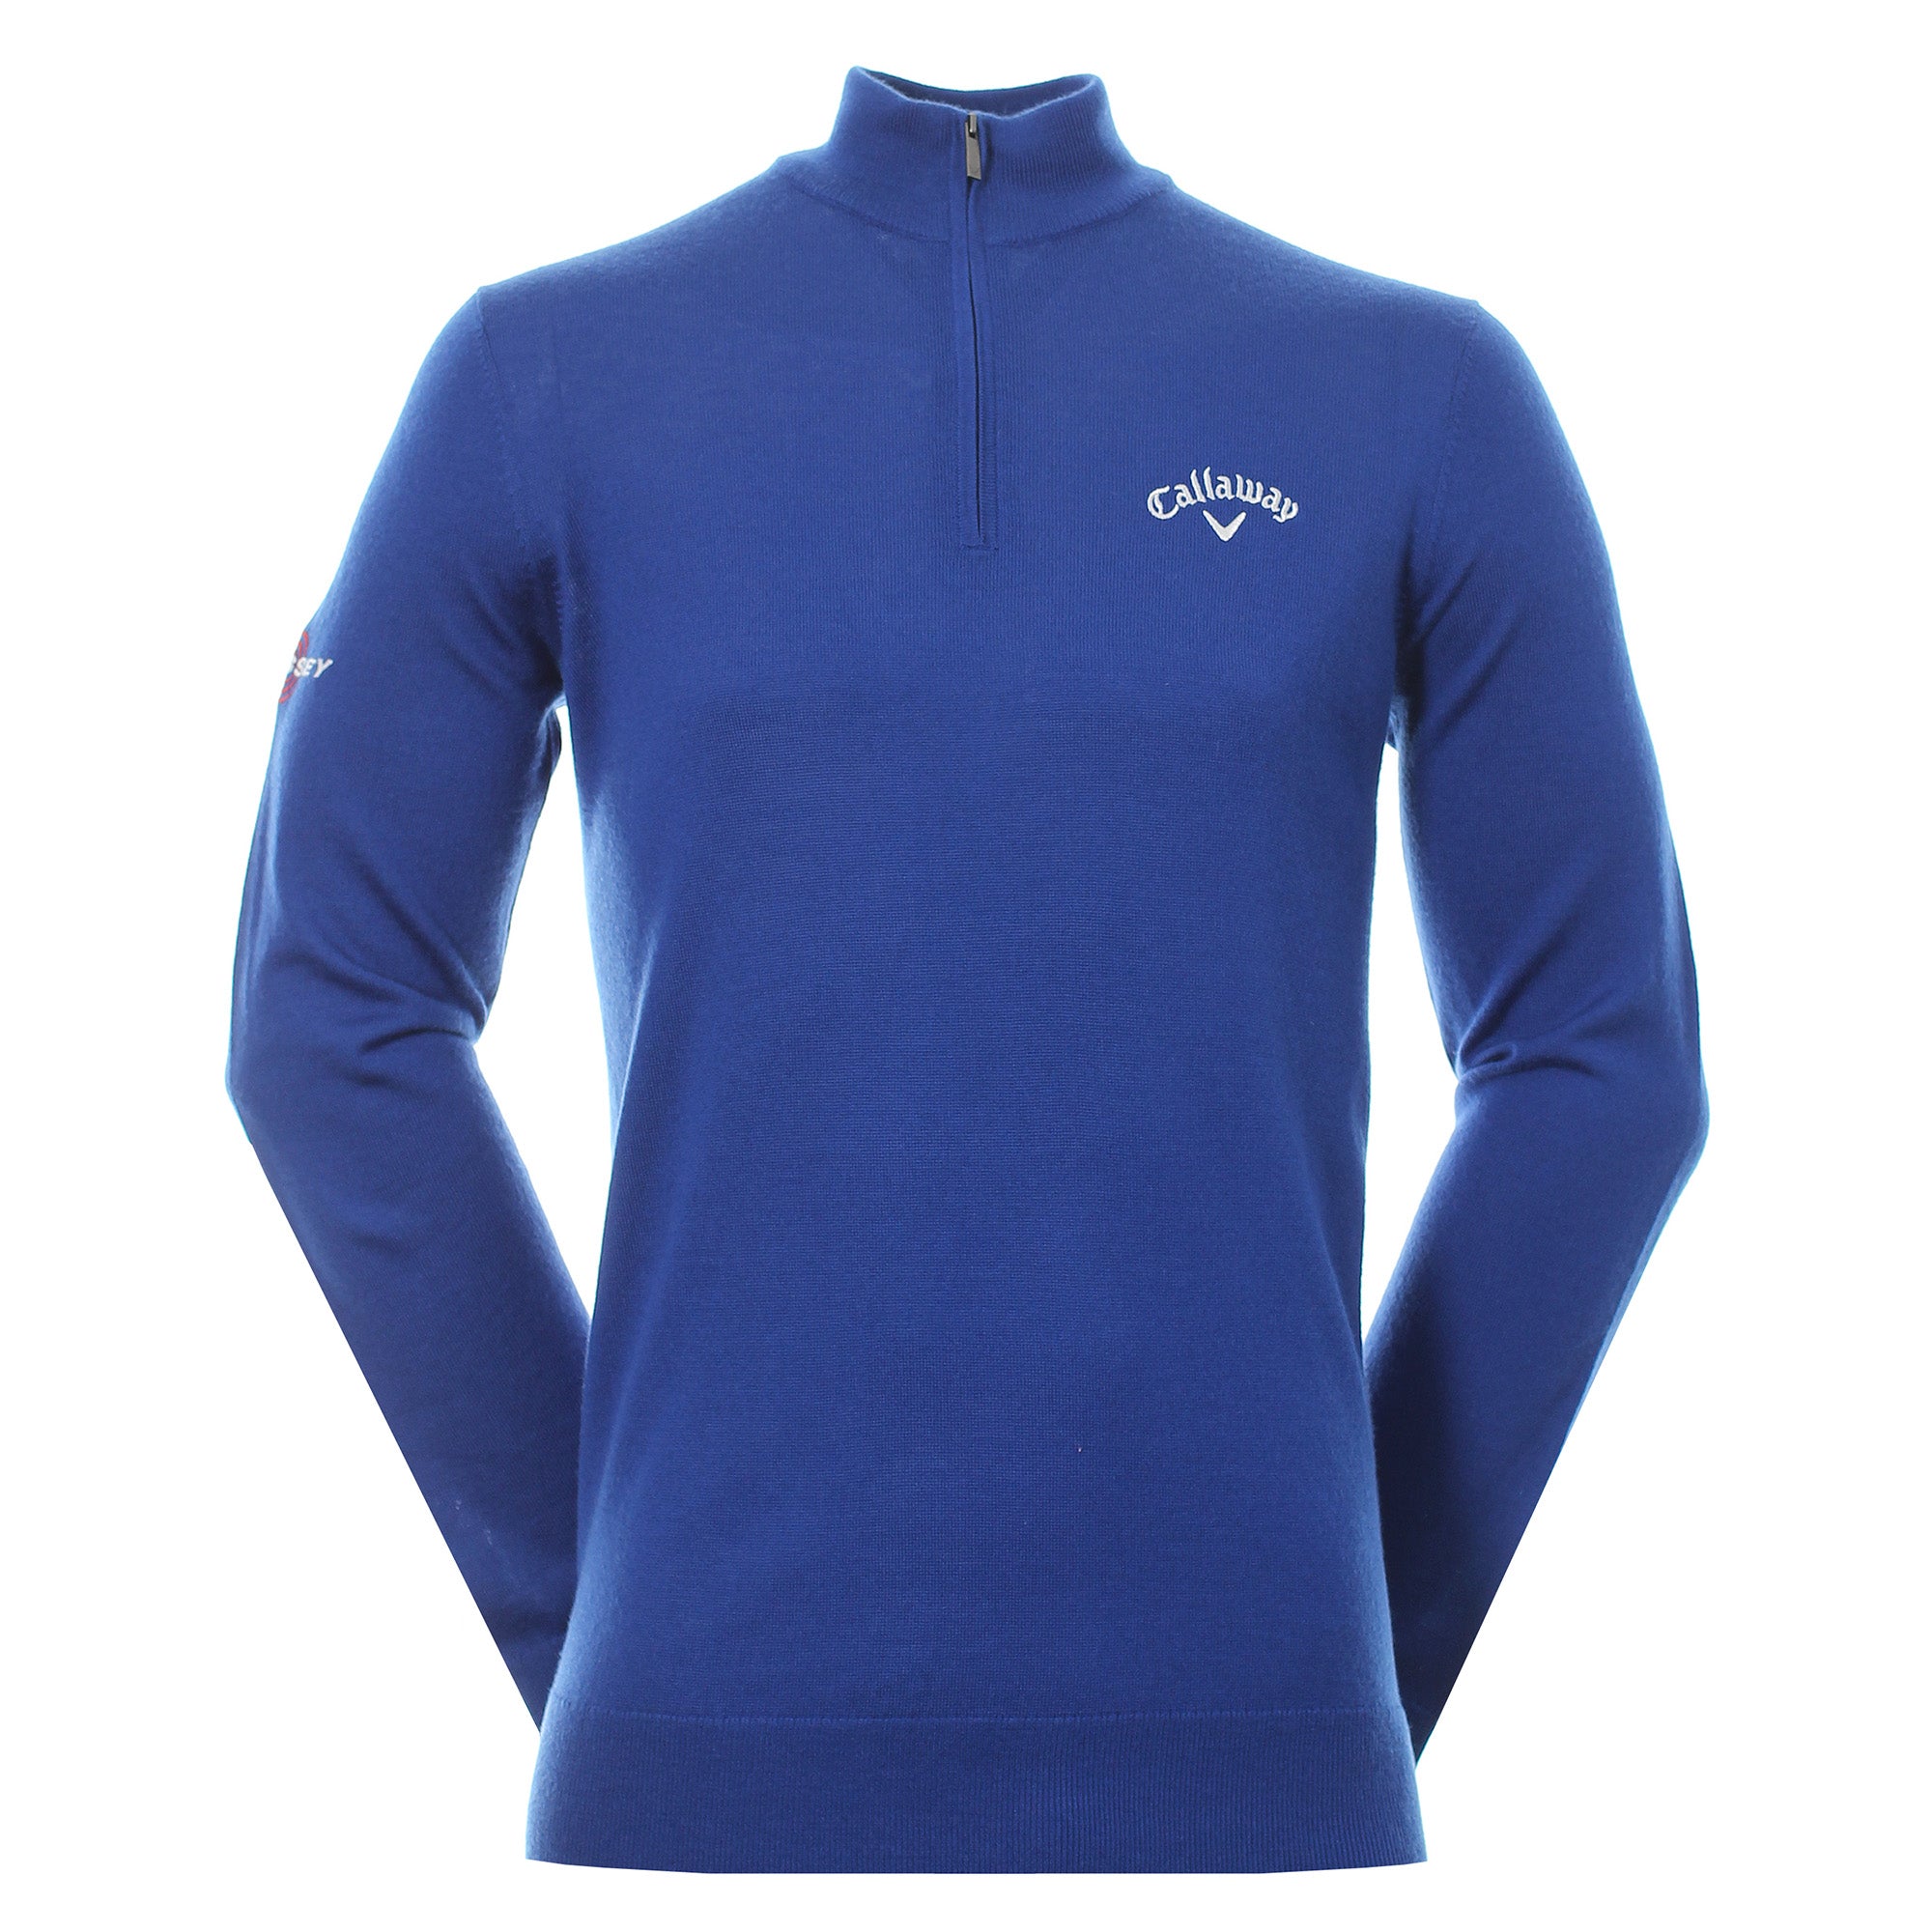 callaway-golf-blended-merino-1-4-zip-sweater-cggf80m1-magnetic-blue-496